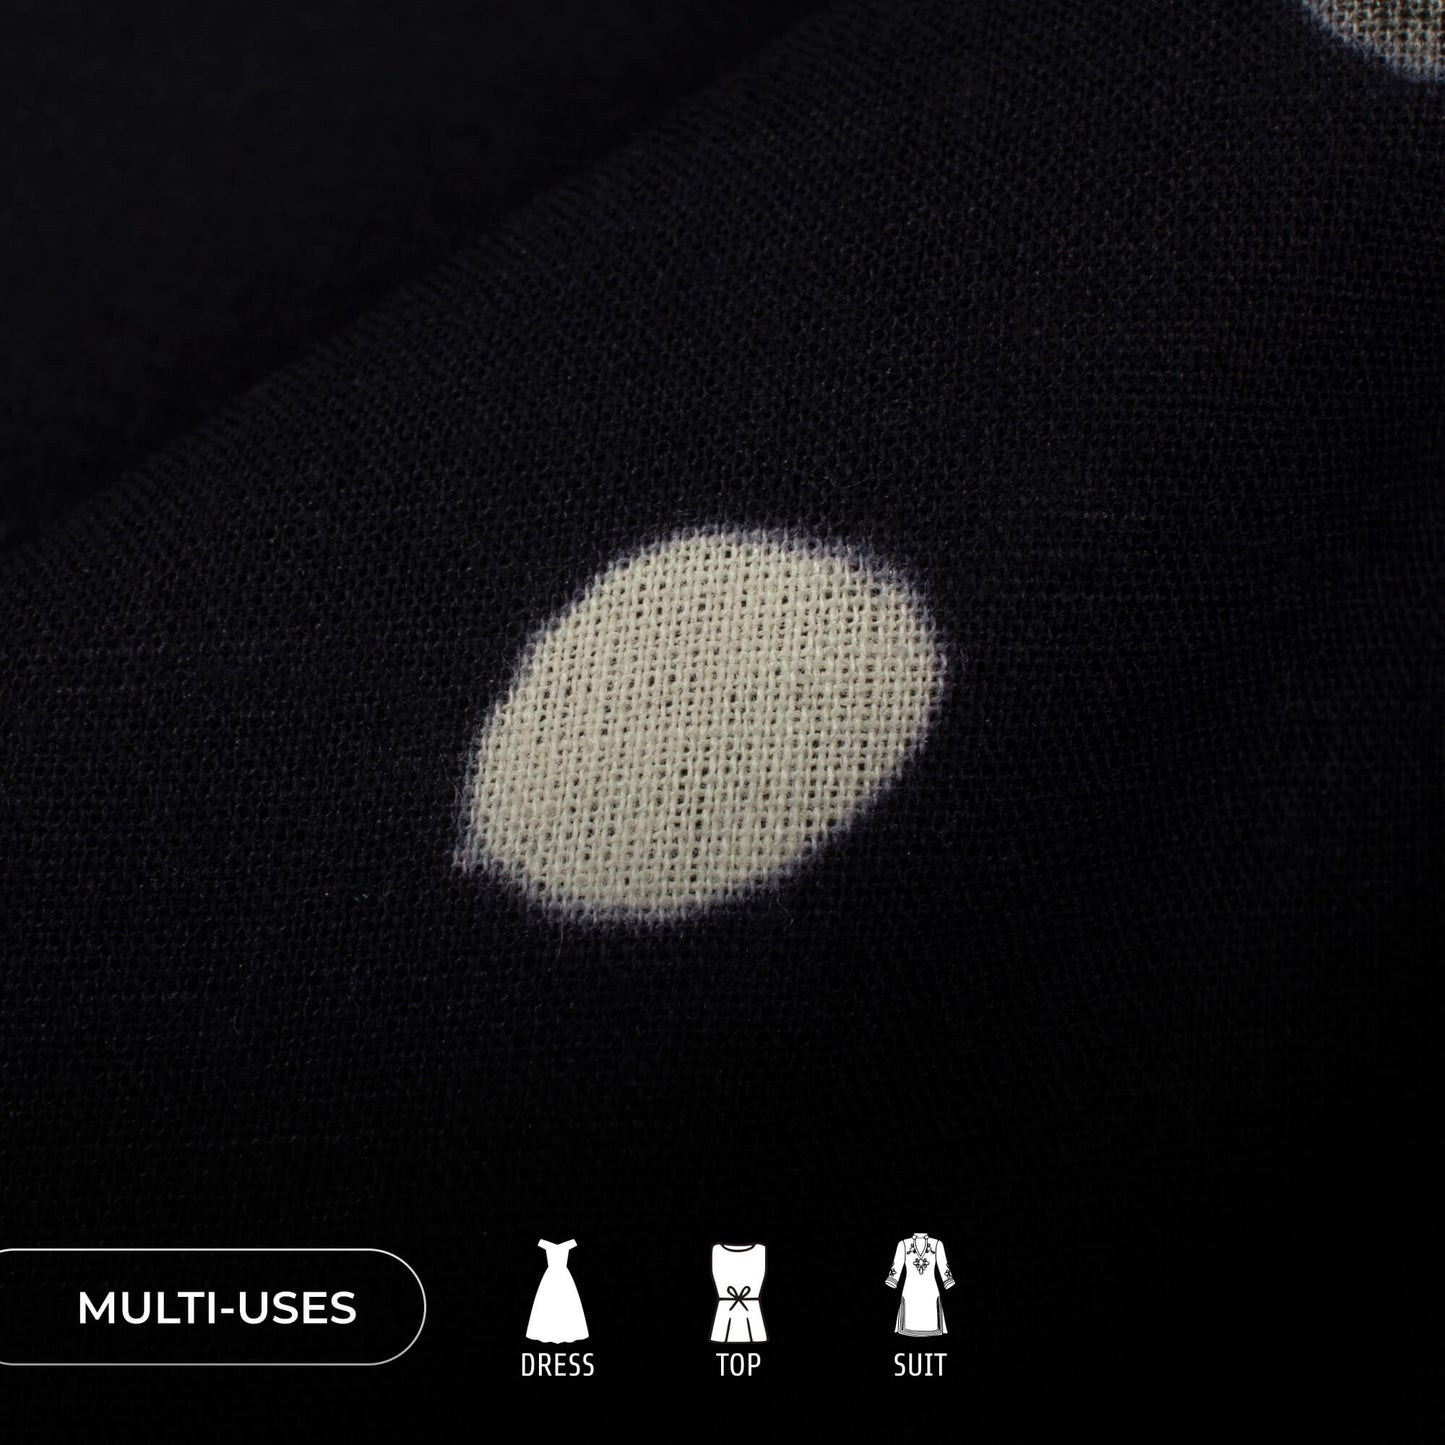 Monochrome Polka Dots Handblock Cotton Fabric